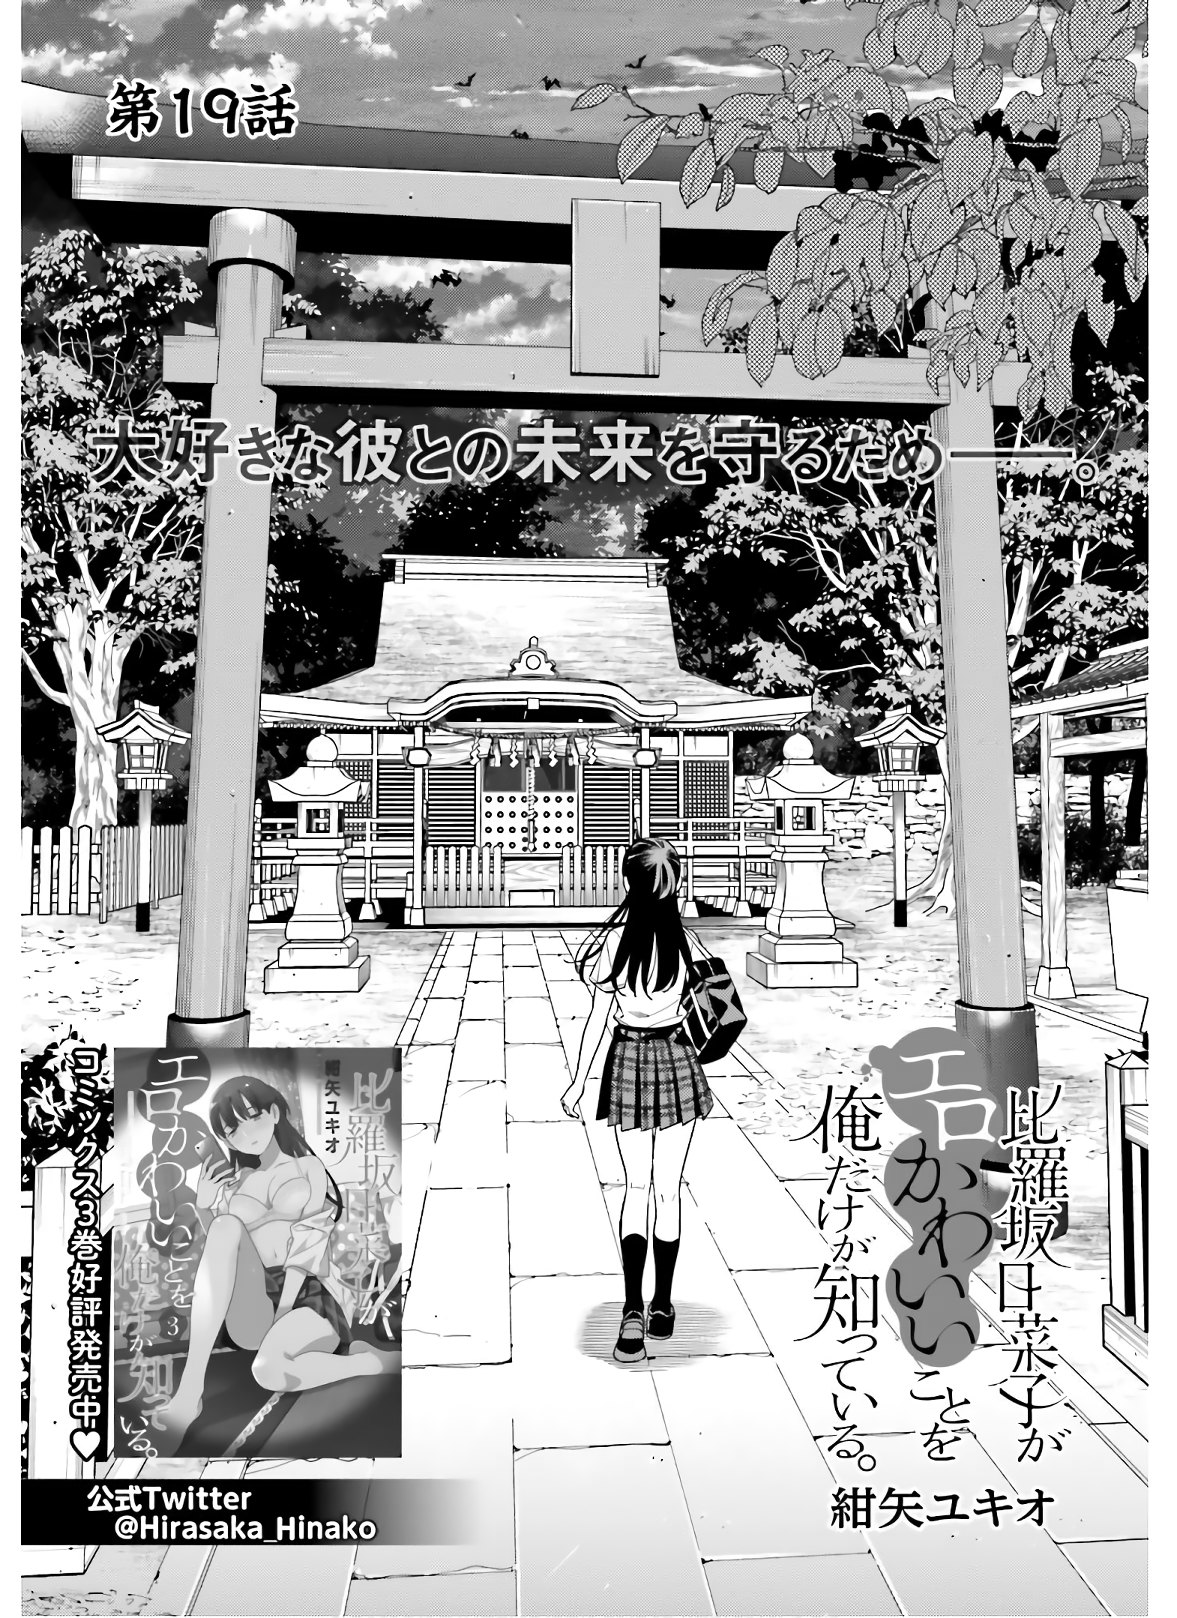 Read Summer Time Render Chapter 39 on Mangakakalot